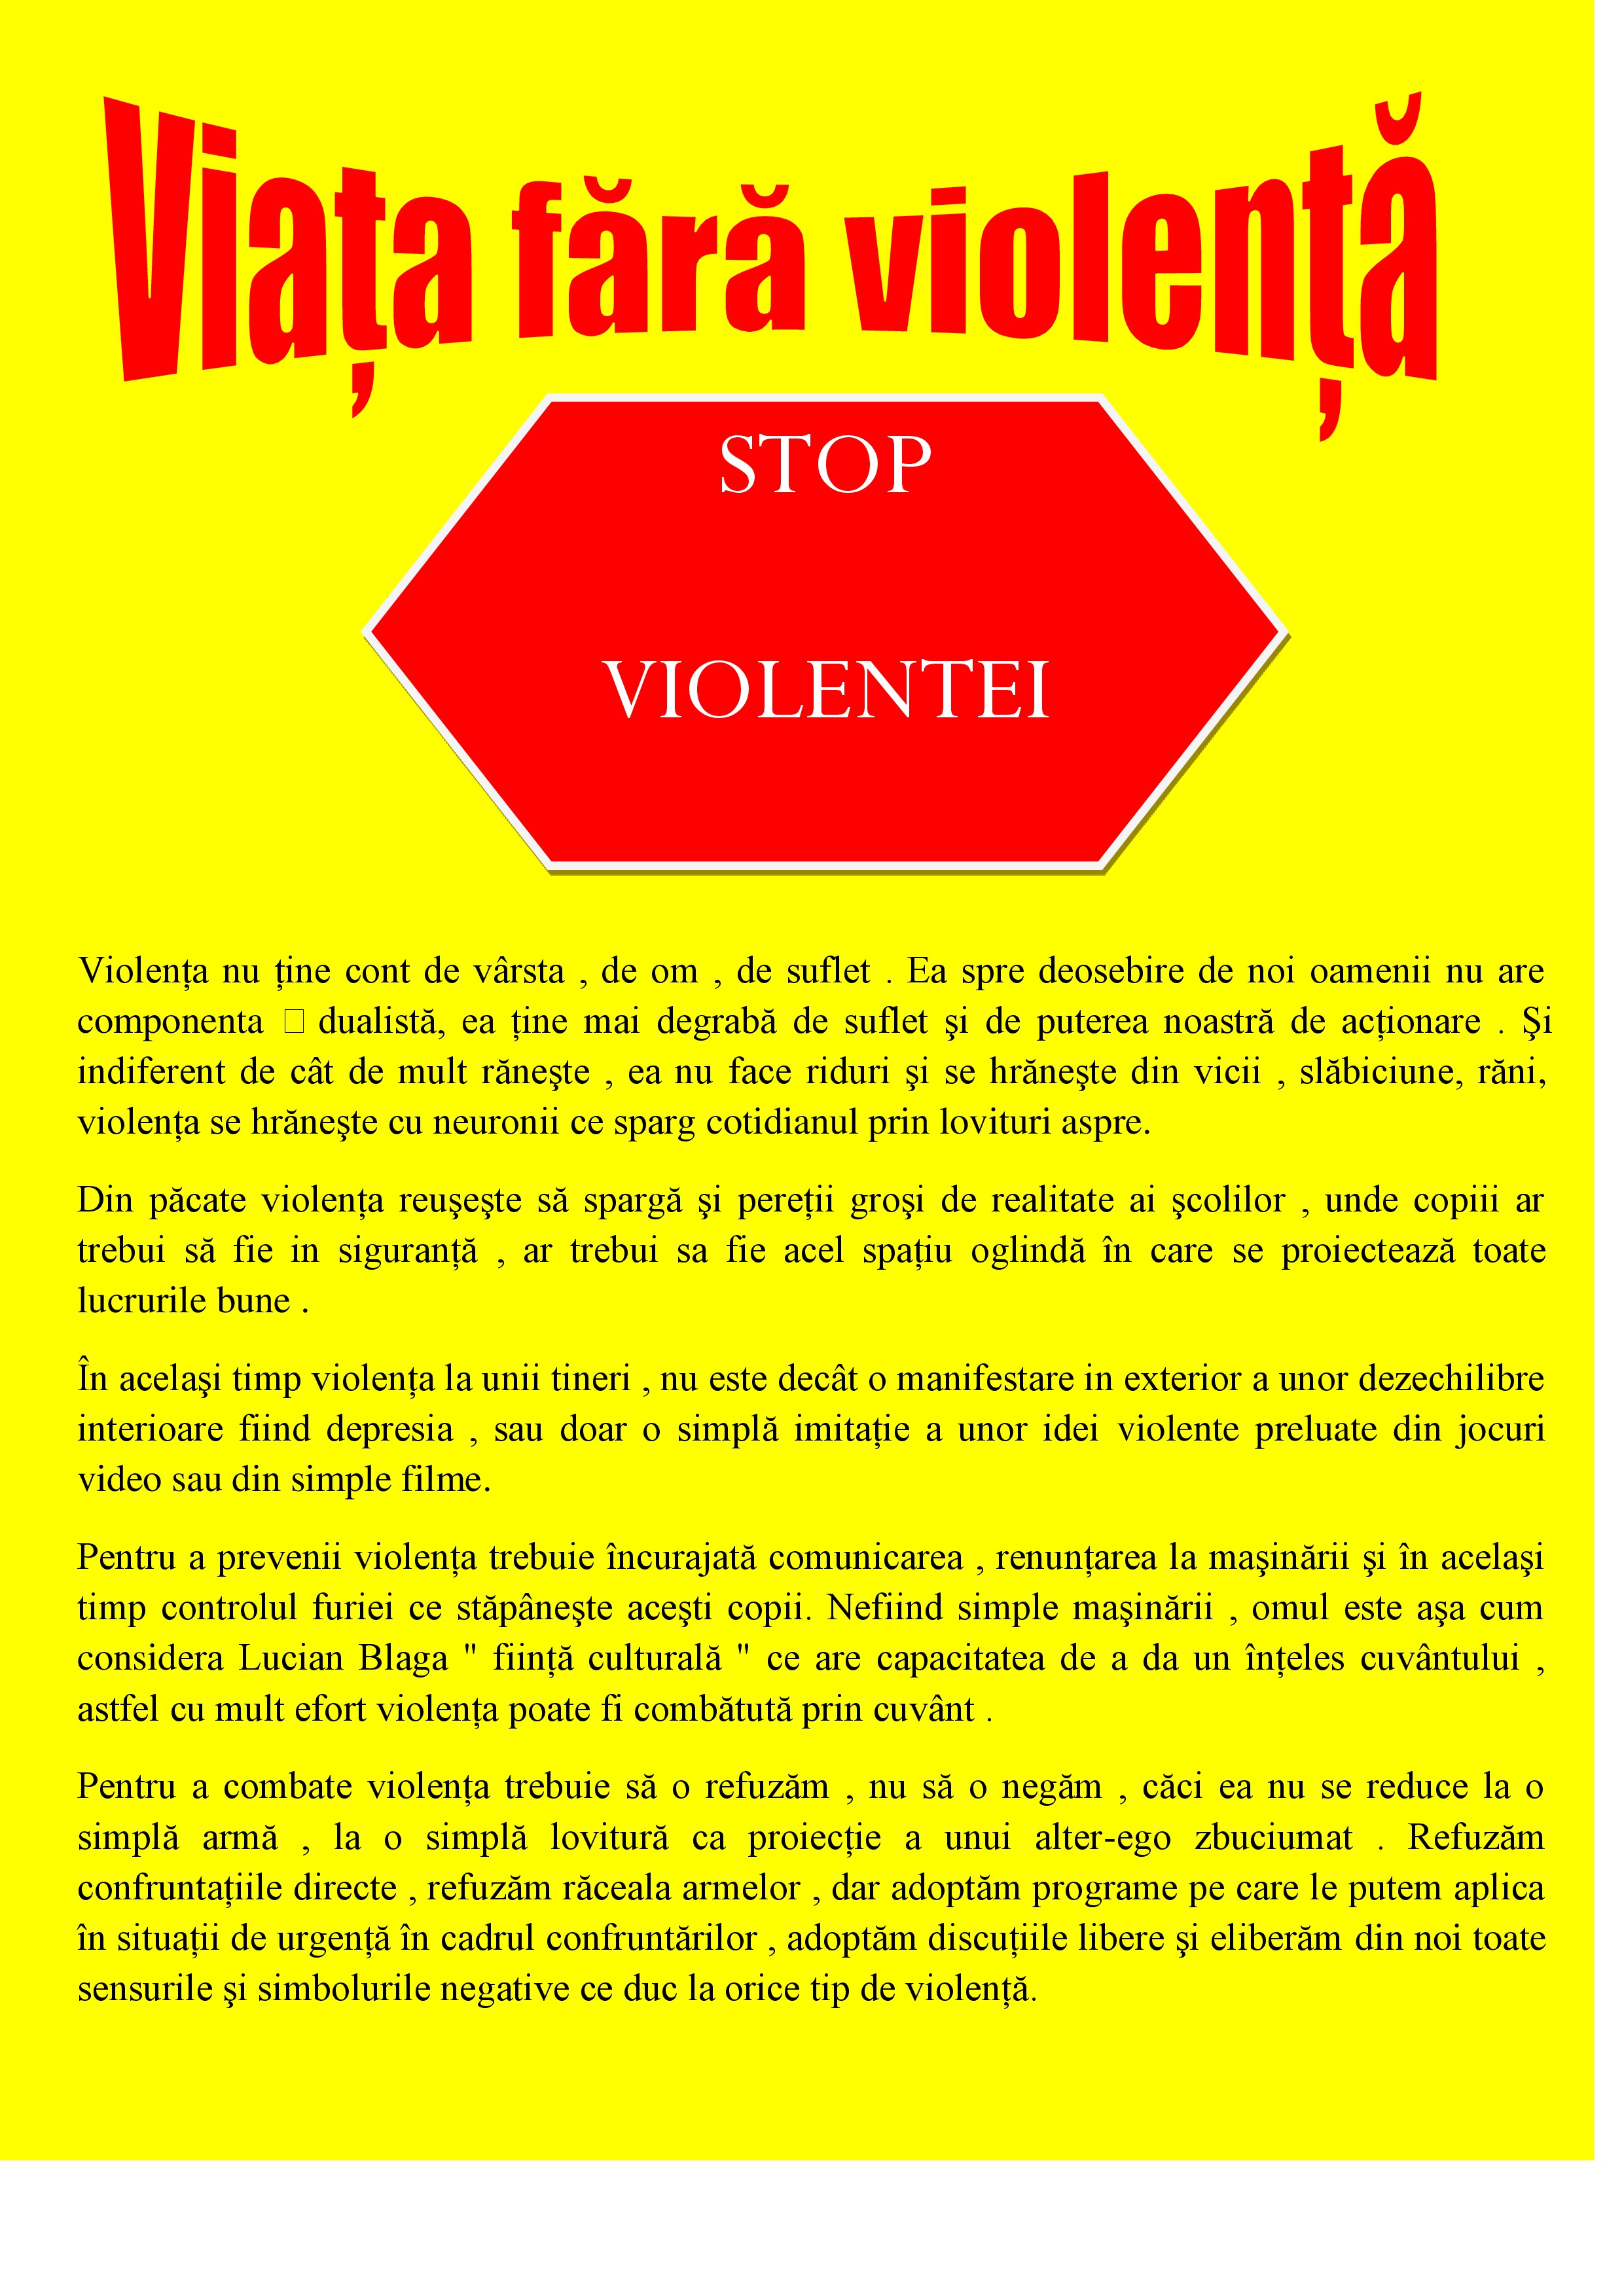 Sandu_Carol_Viata_fara_violenta-page-0